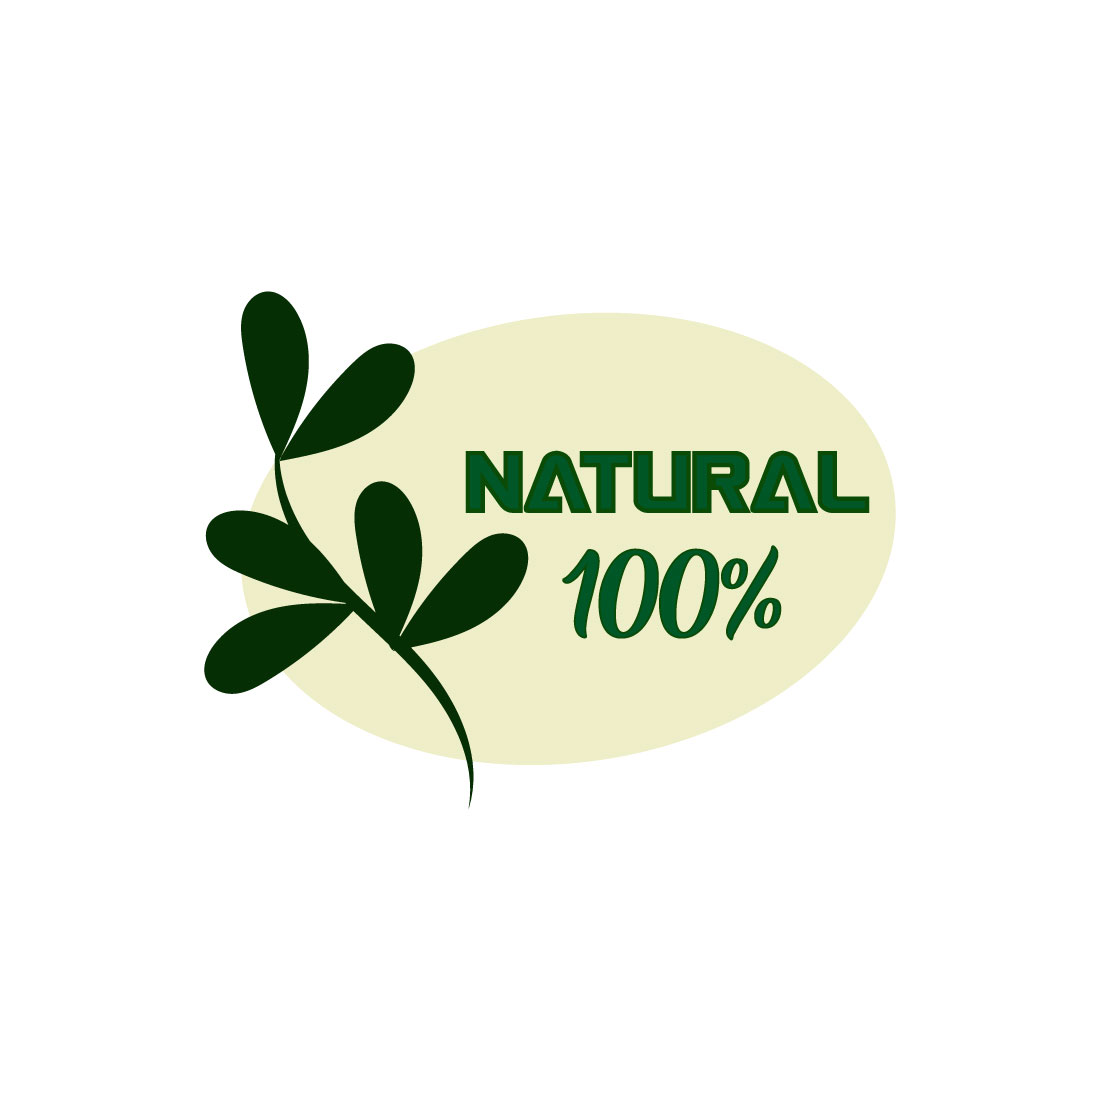 Free Natural eco logo preview image.